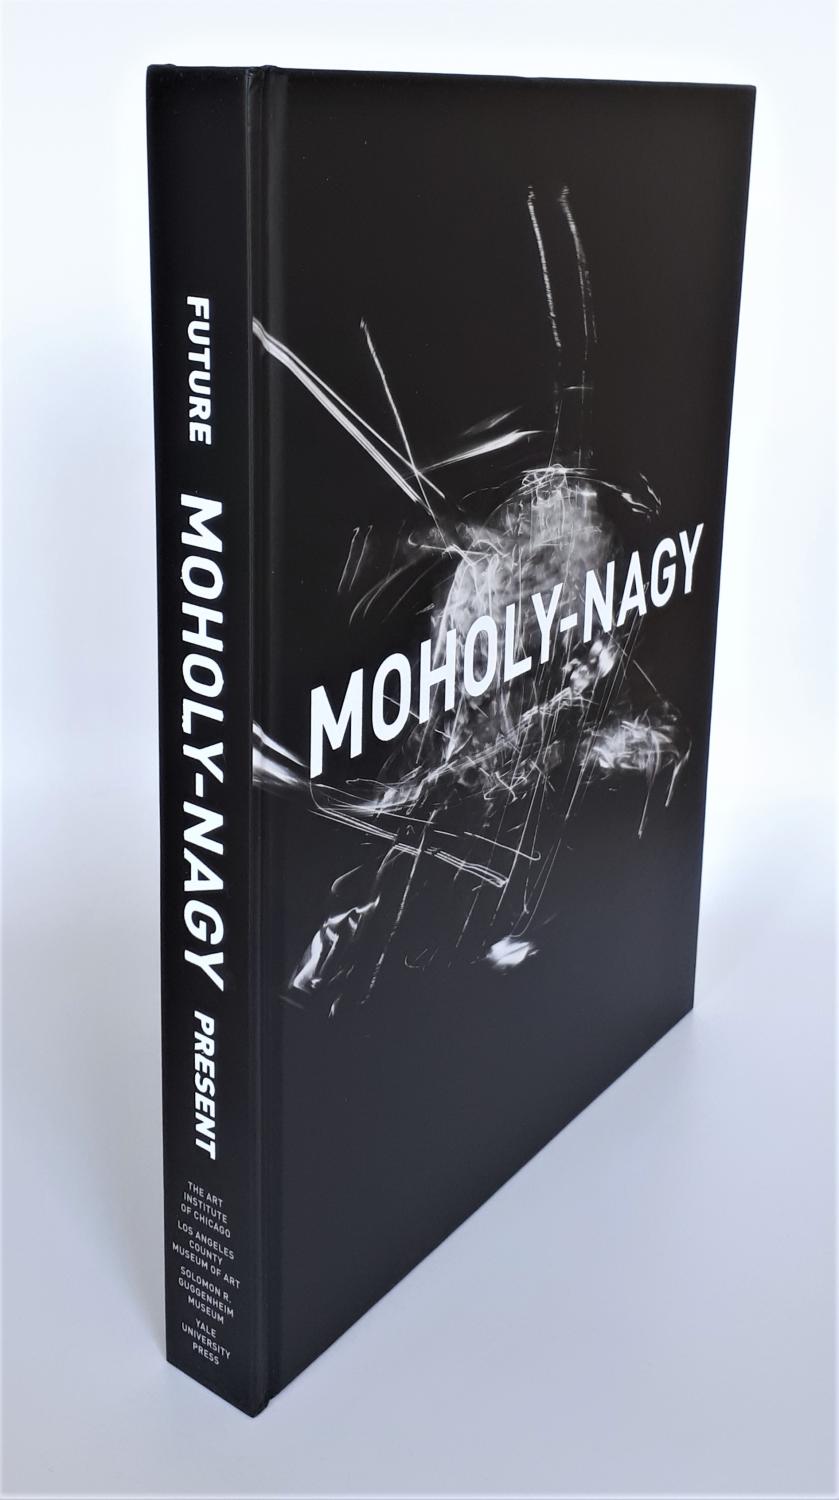 Moholy-Nagy: Future Present by Matthew S. Witkovsky, Carol S. Eliel, Karole  P.B. Vail: Fine Hardcover (2016) 1st Edition